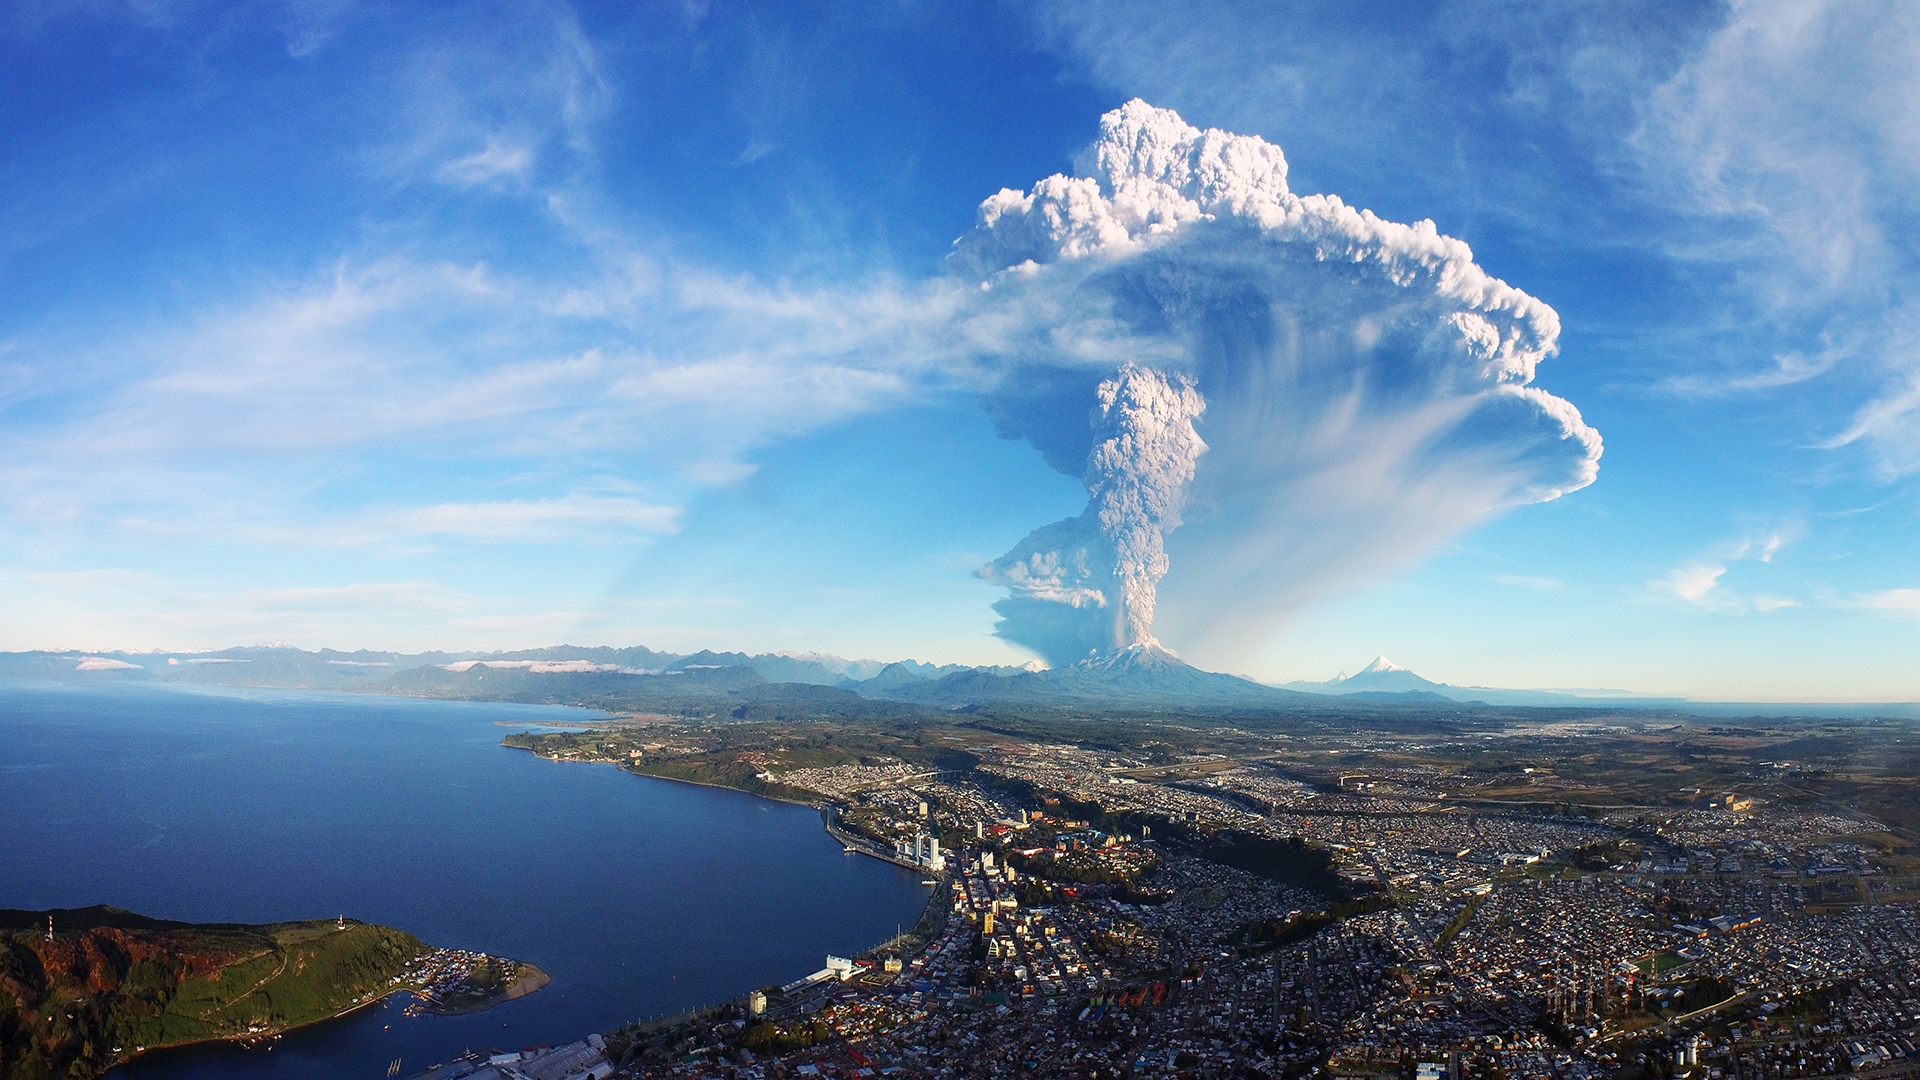 Amazing shot of the Calbuco volcano eruption in Chile. (1920x1080 ...